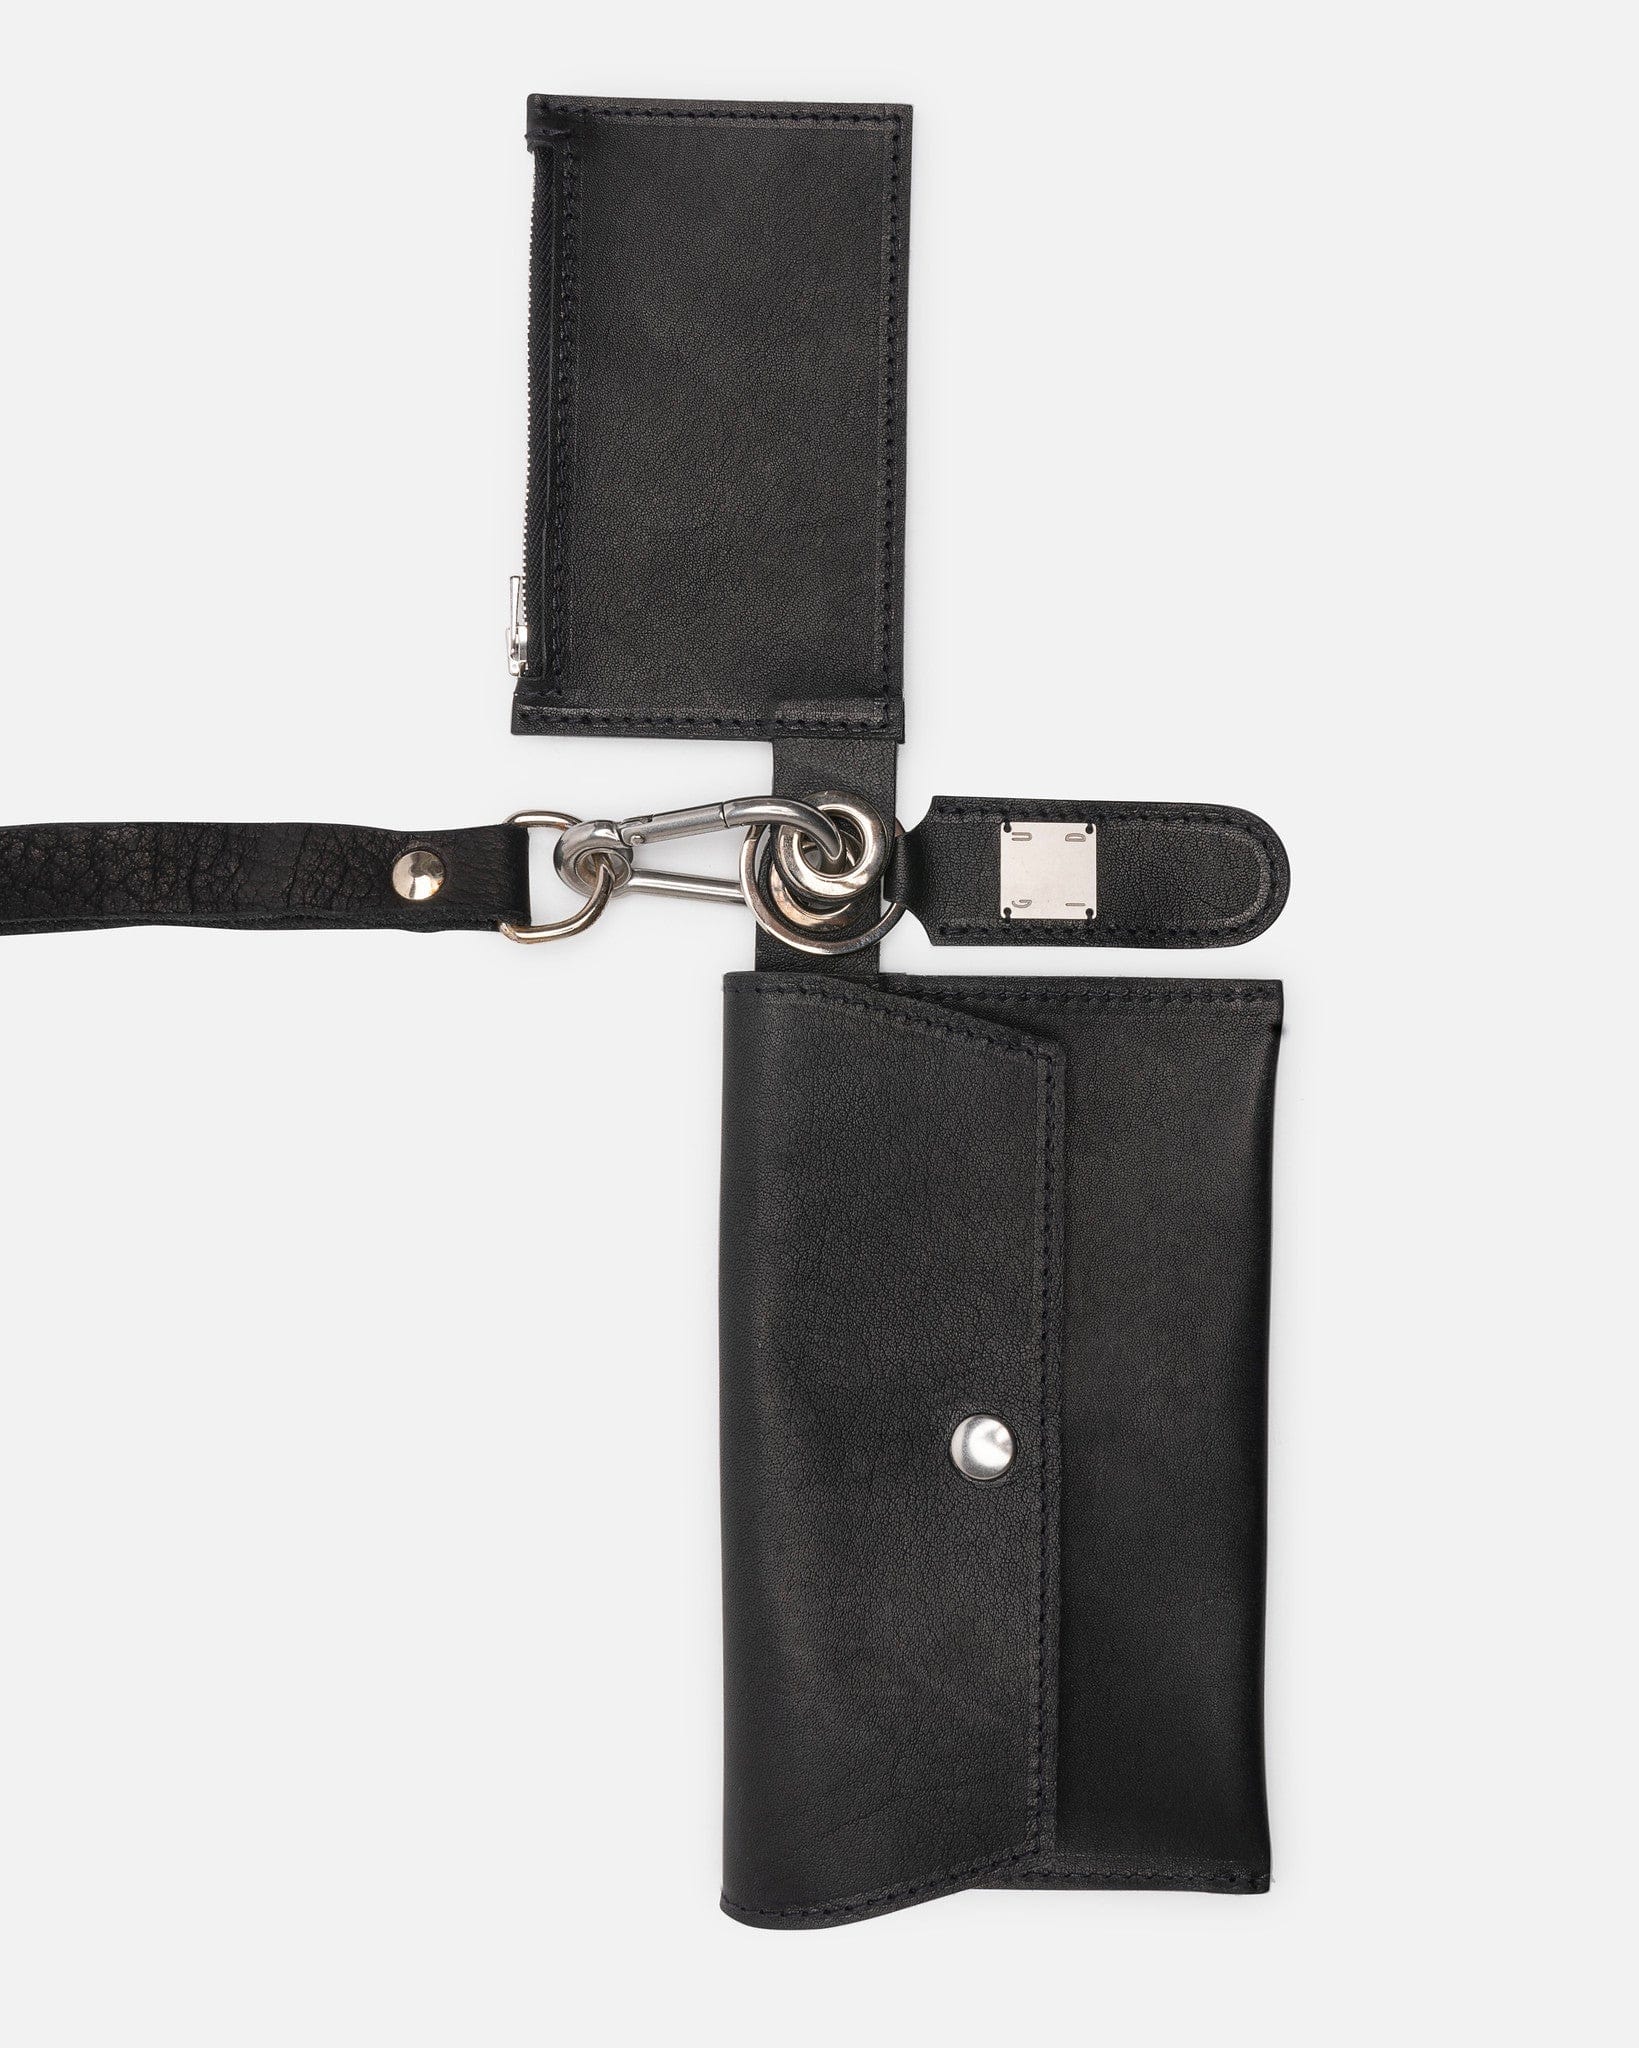 Guidi Leather Goods OS Phone-Card Holder in Black Pressed Kangaroo